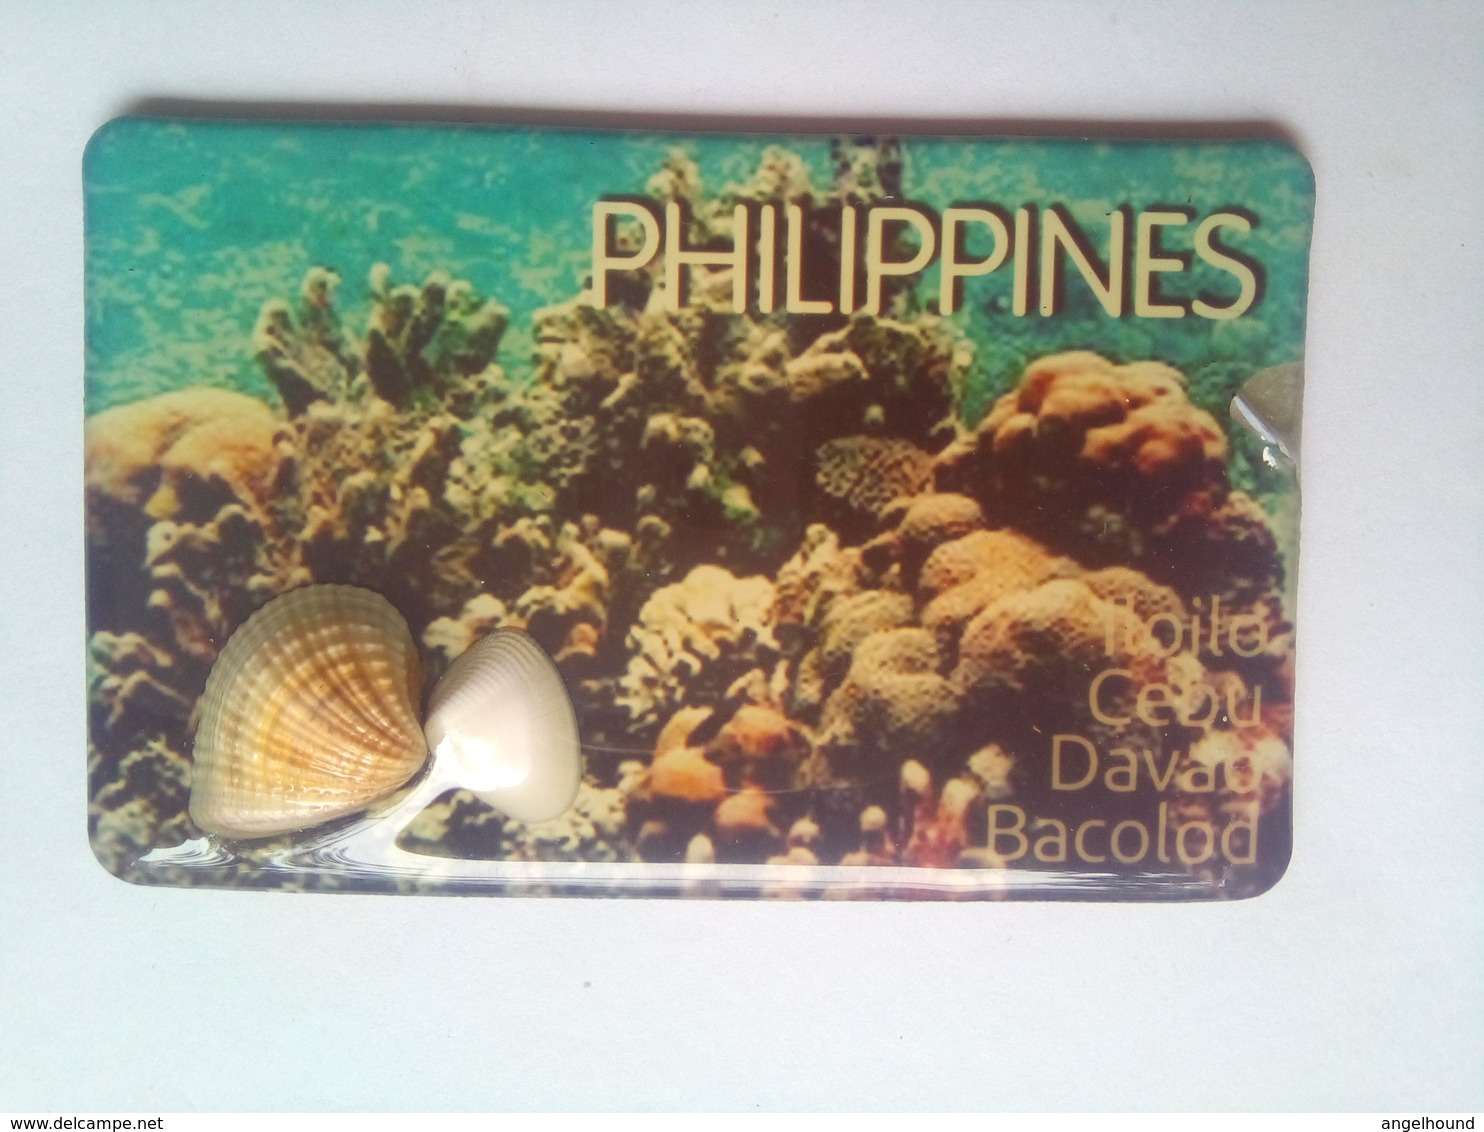 Shells Iloilo Cebu Davao Bacolod - Verkehr & Transport